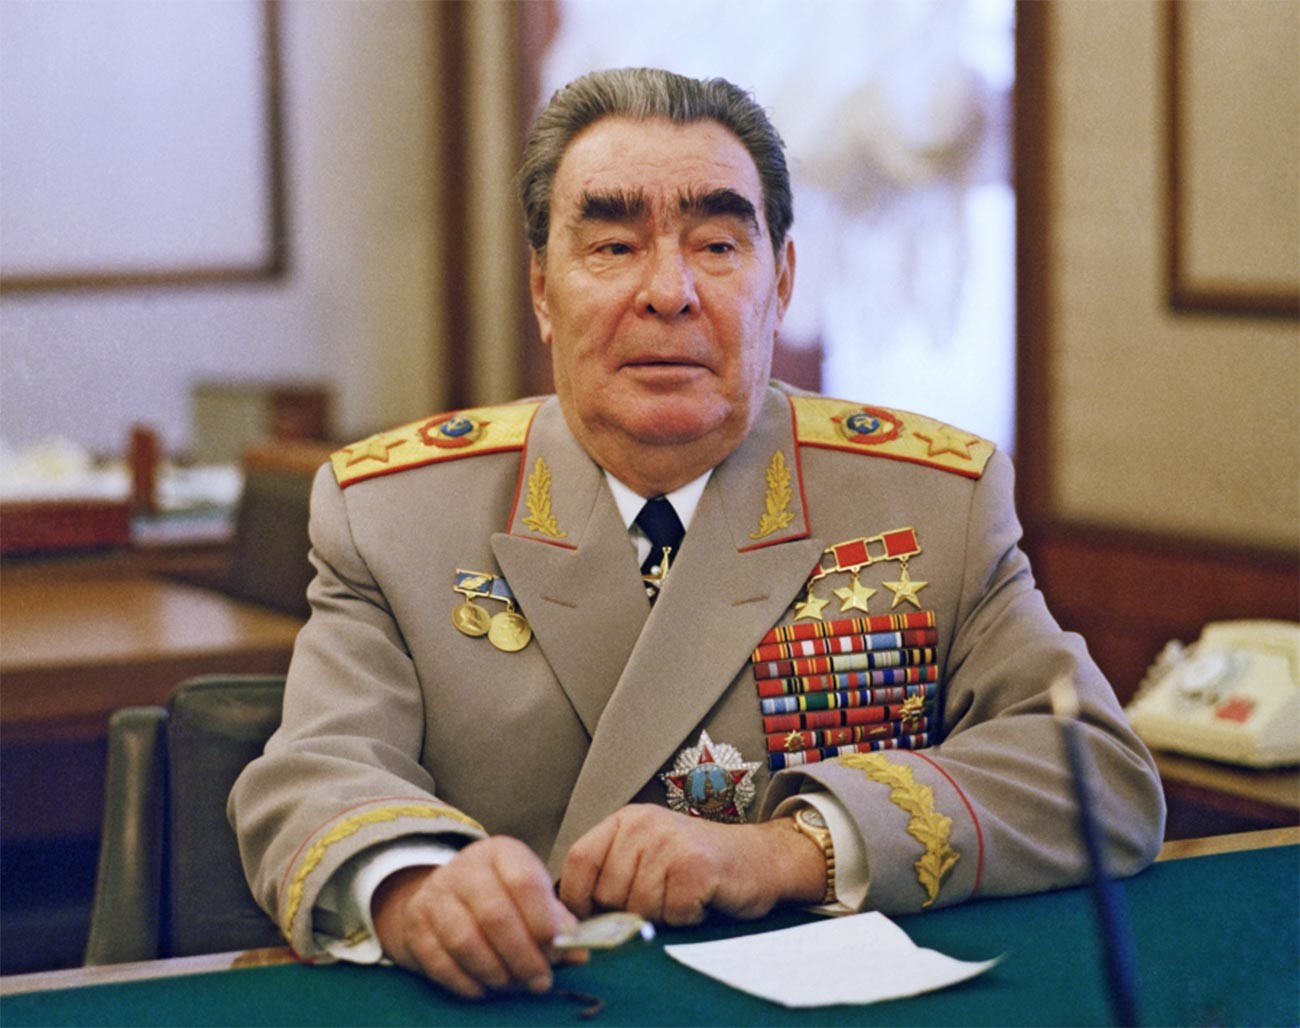 Leonid Brezhnev wearing his Order of Victory